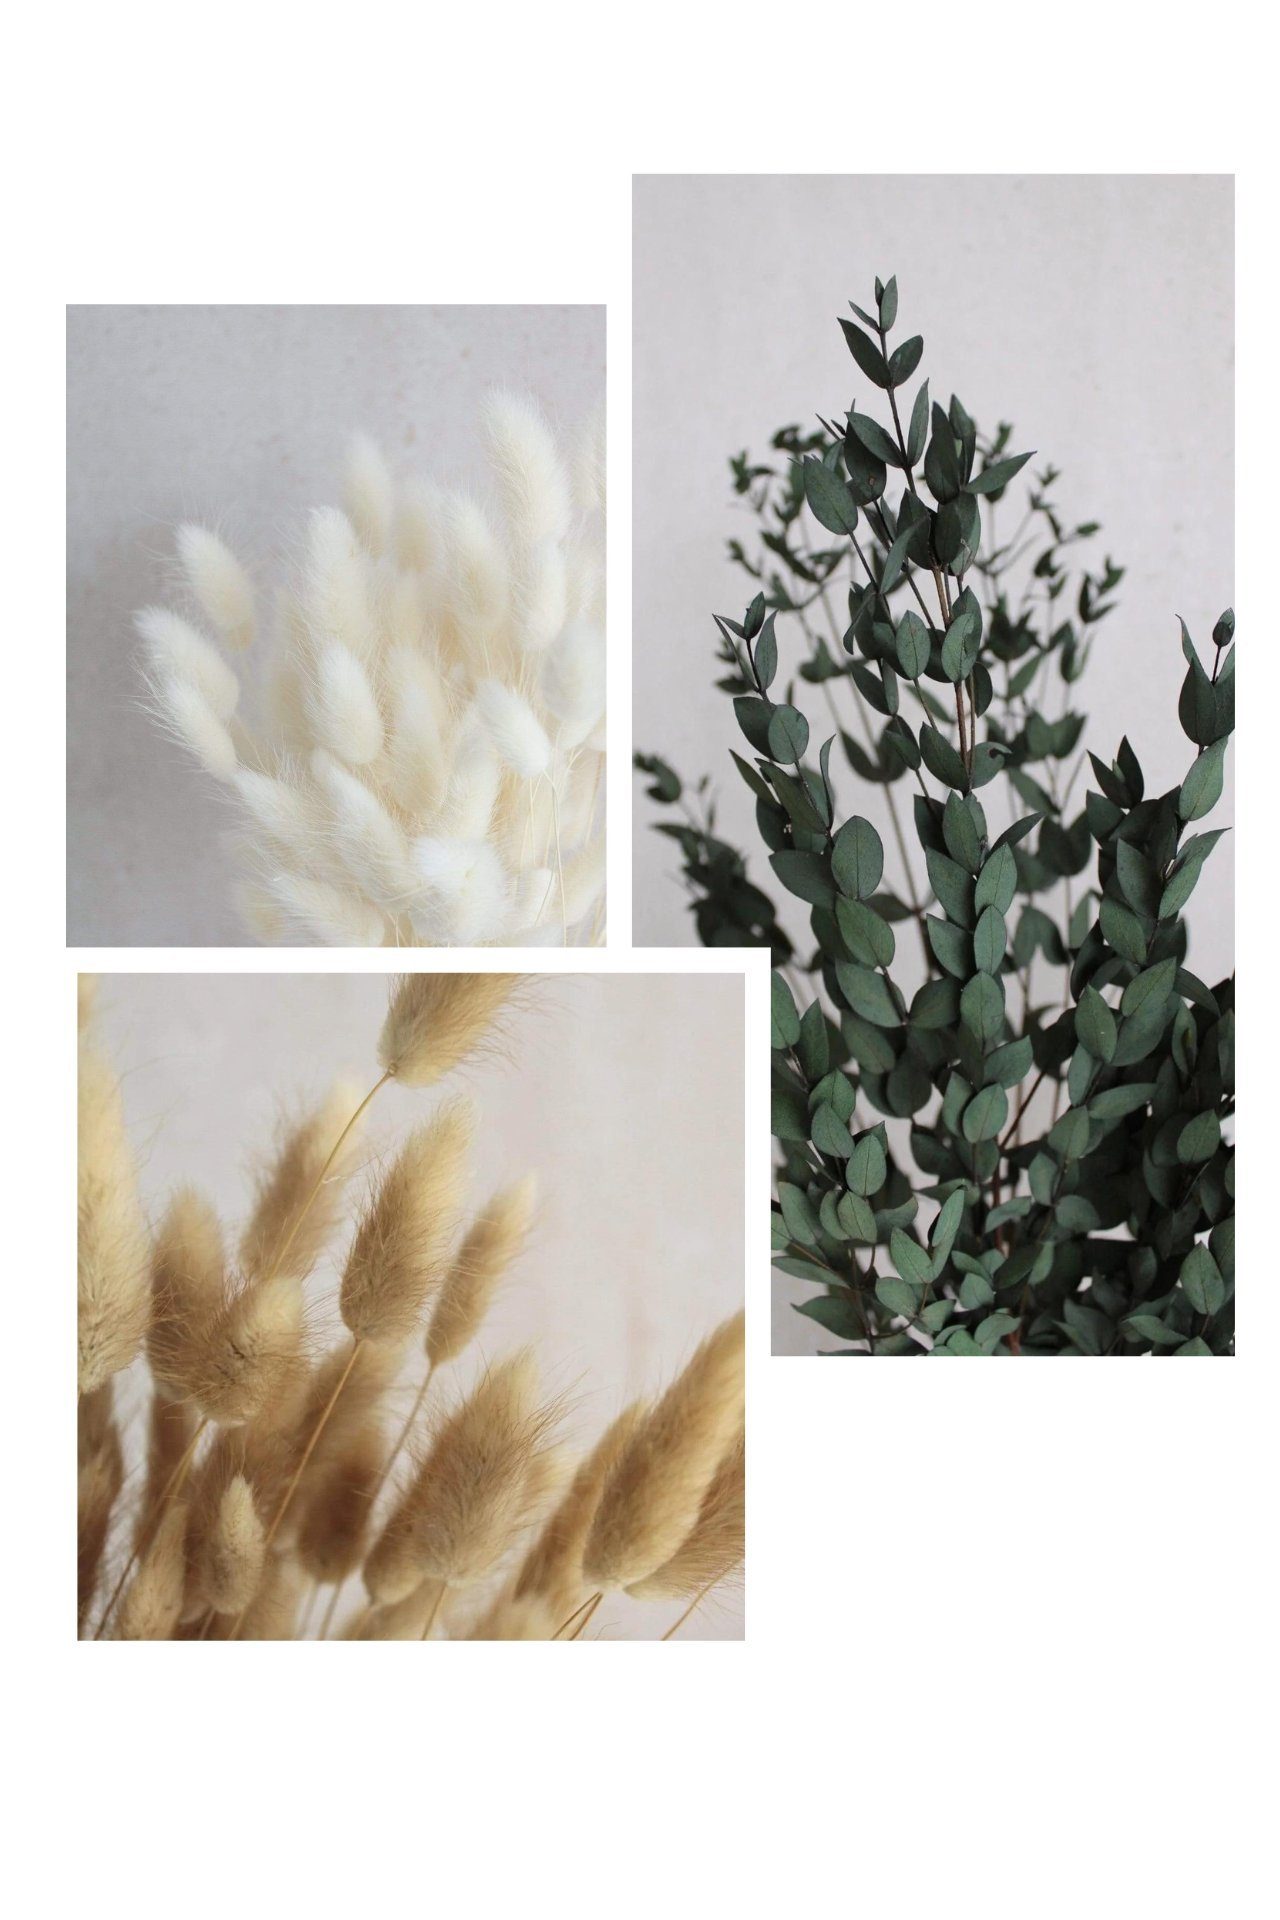 Trockenblume Trockenblumen-Set mit Eukalyptus Parvi, Lagurus in Weiß und Natur Trockenblumen, Vasenglück